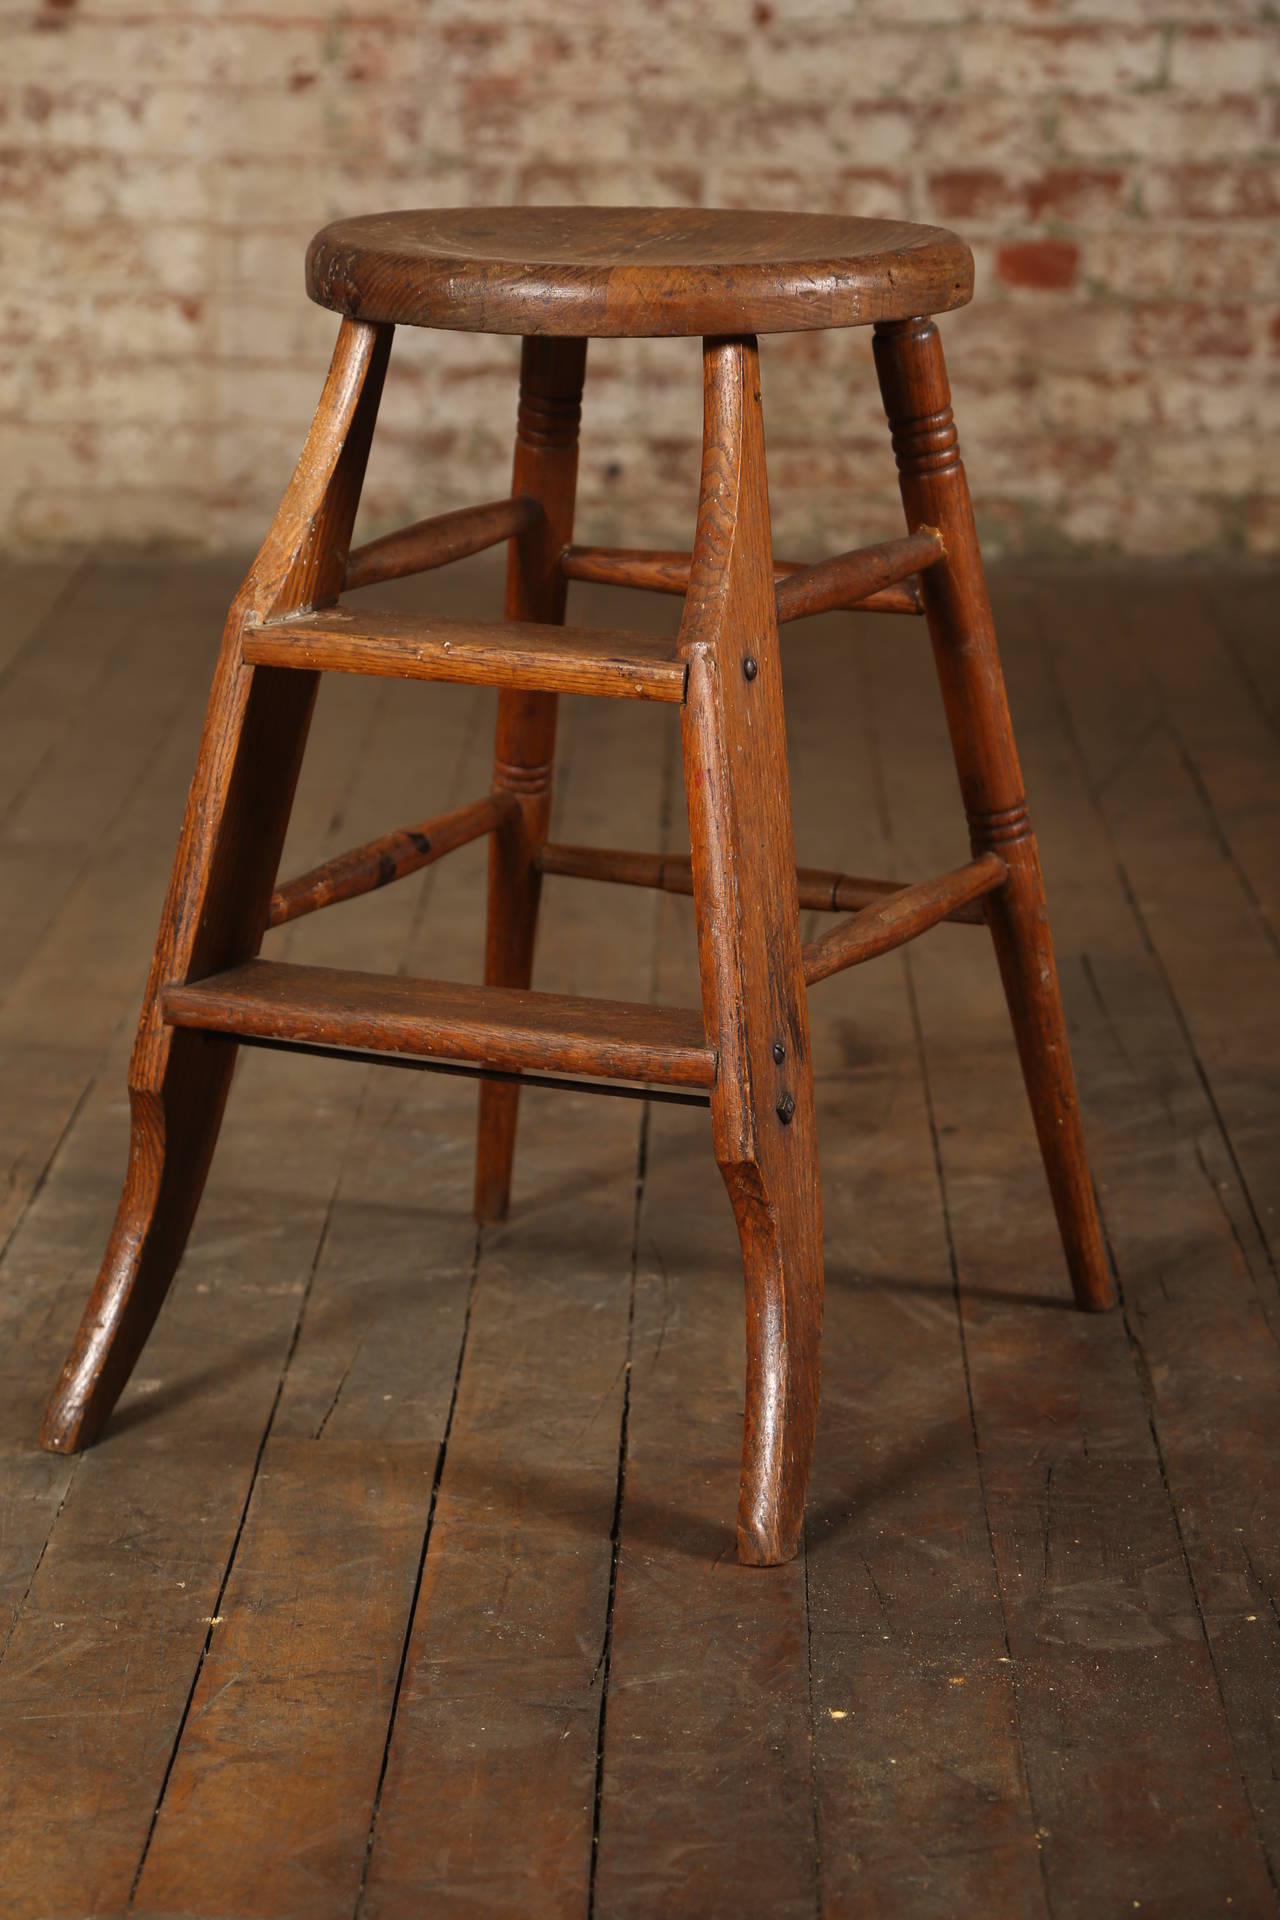 Vintage wooden seating. Vintage wooden step stool. Seat height is 23